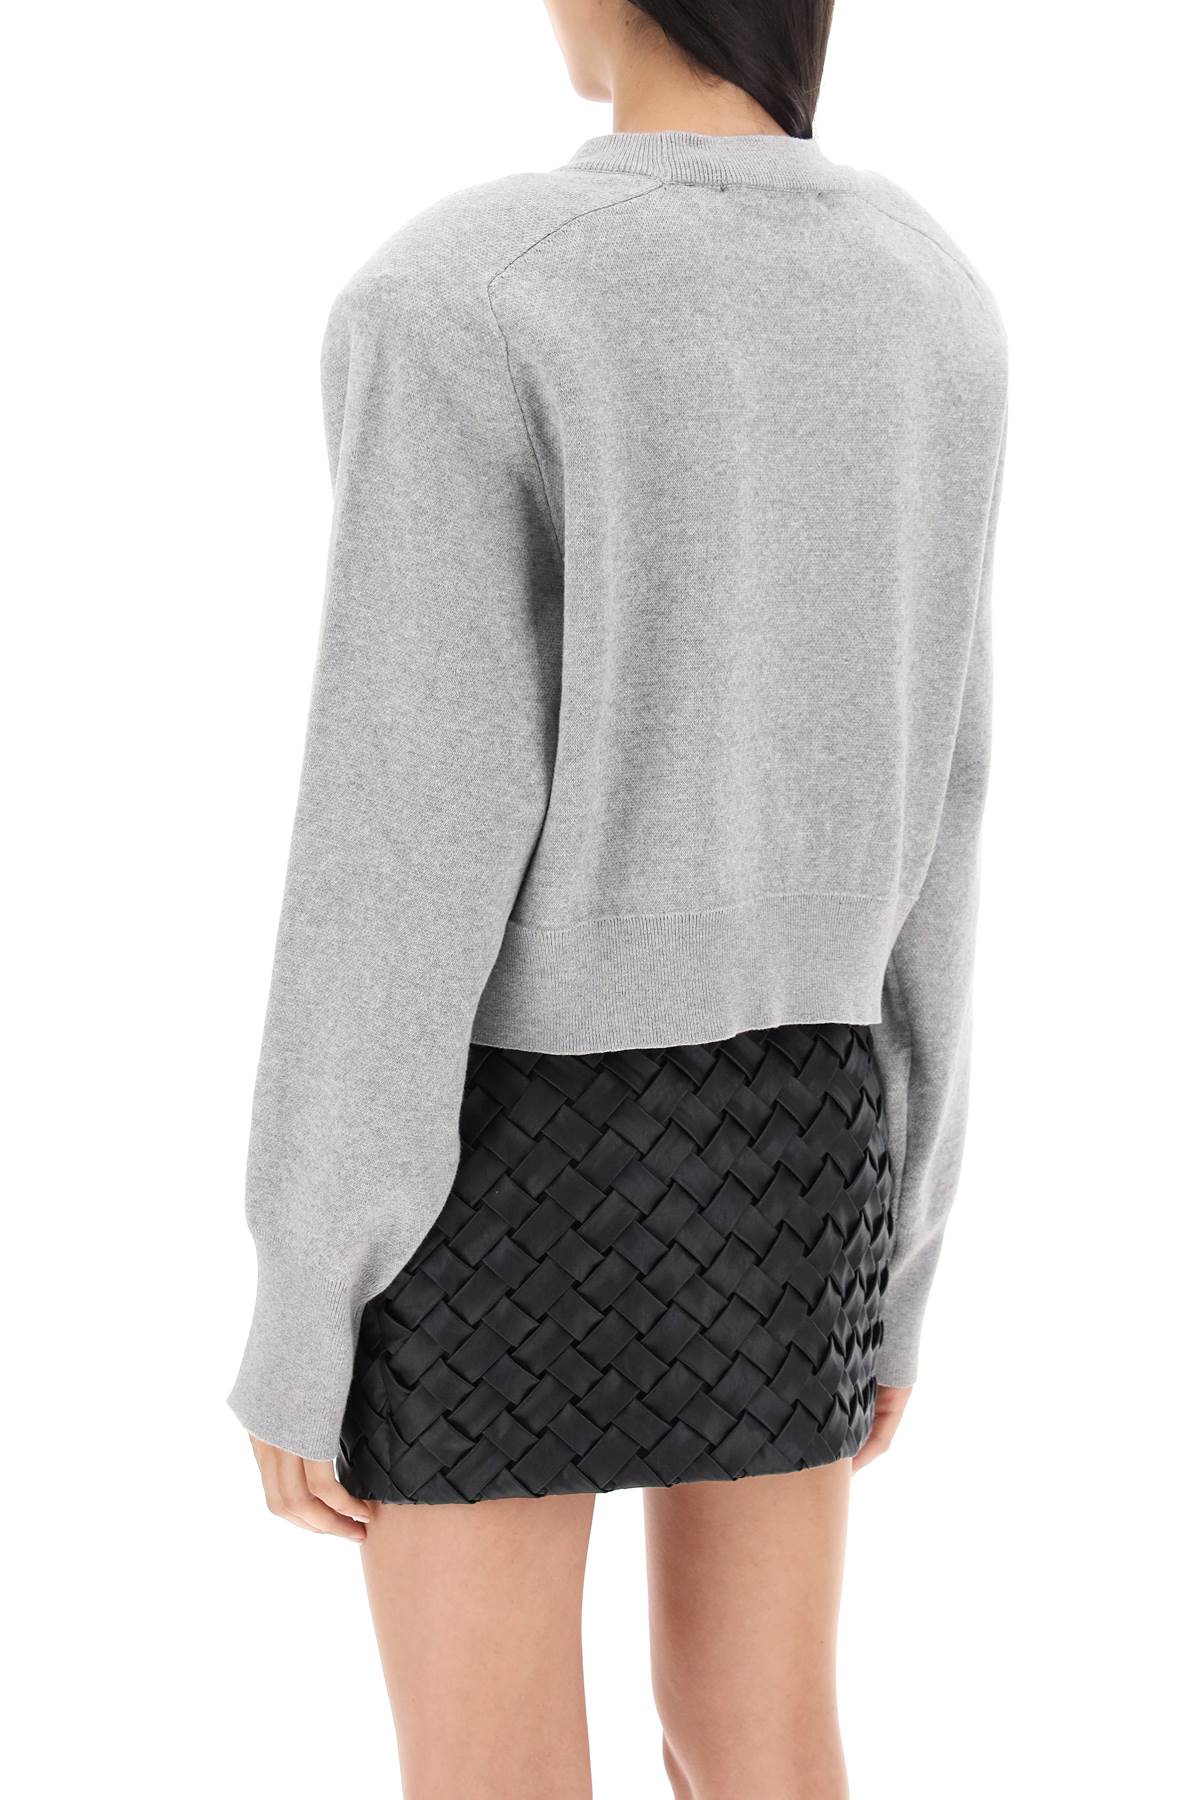 Rotate cropped sweater with rhinestone-studded logo-2